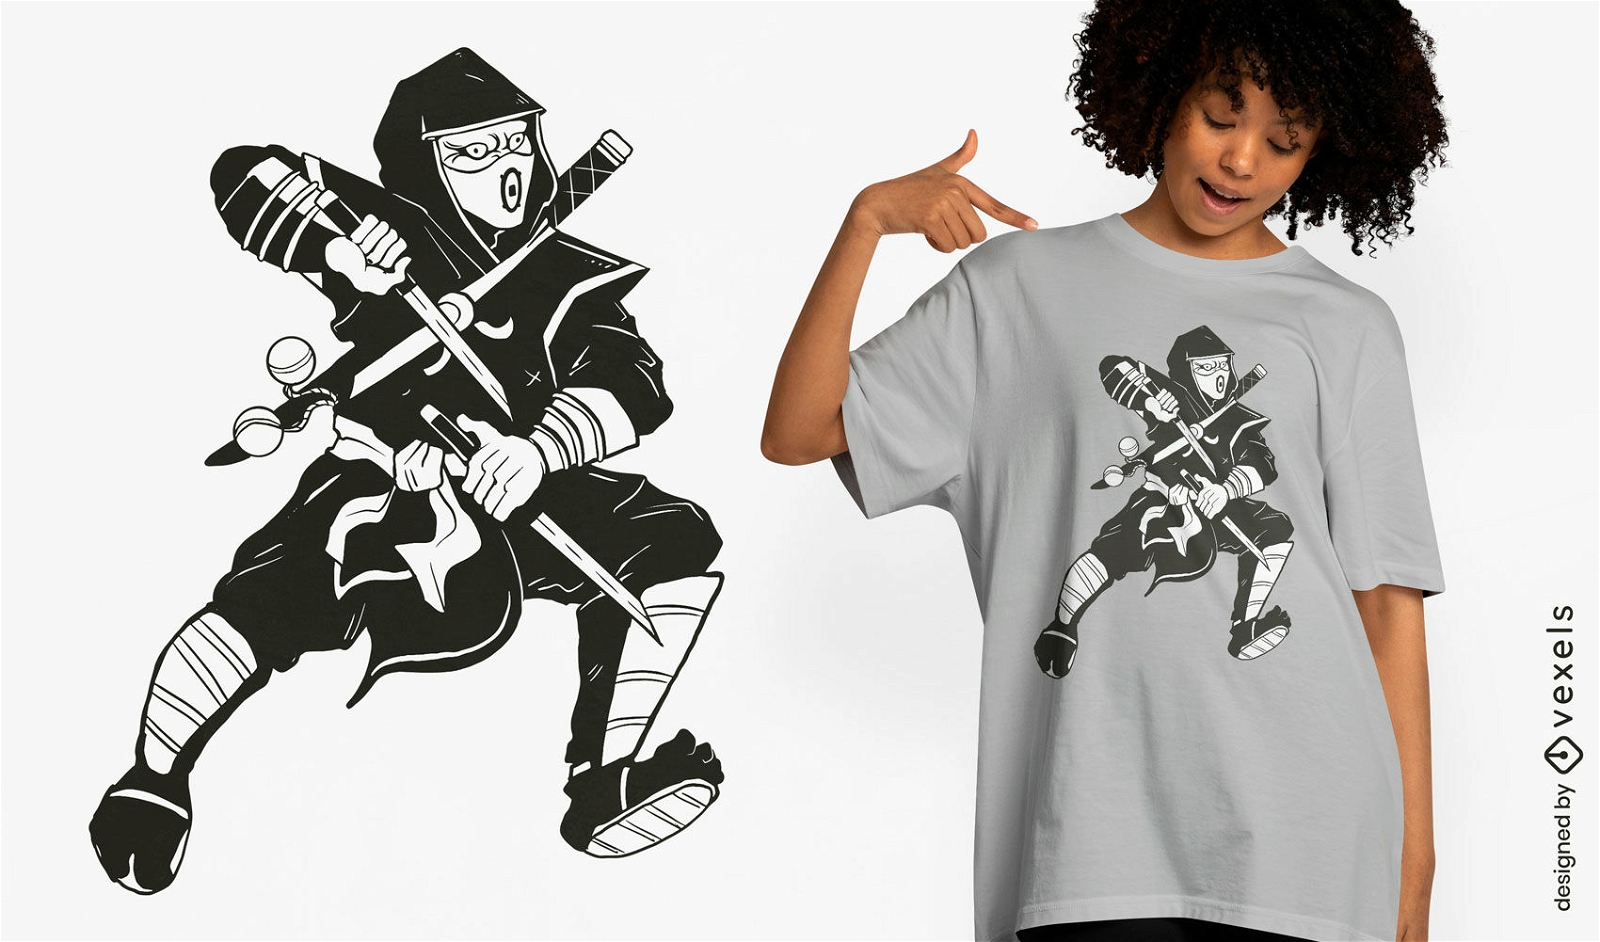 Ninja warrior t-shirt design